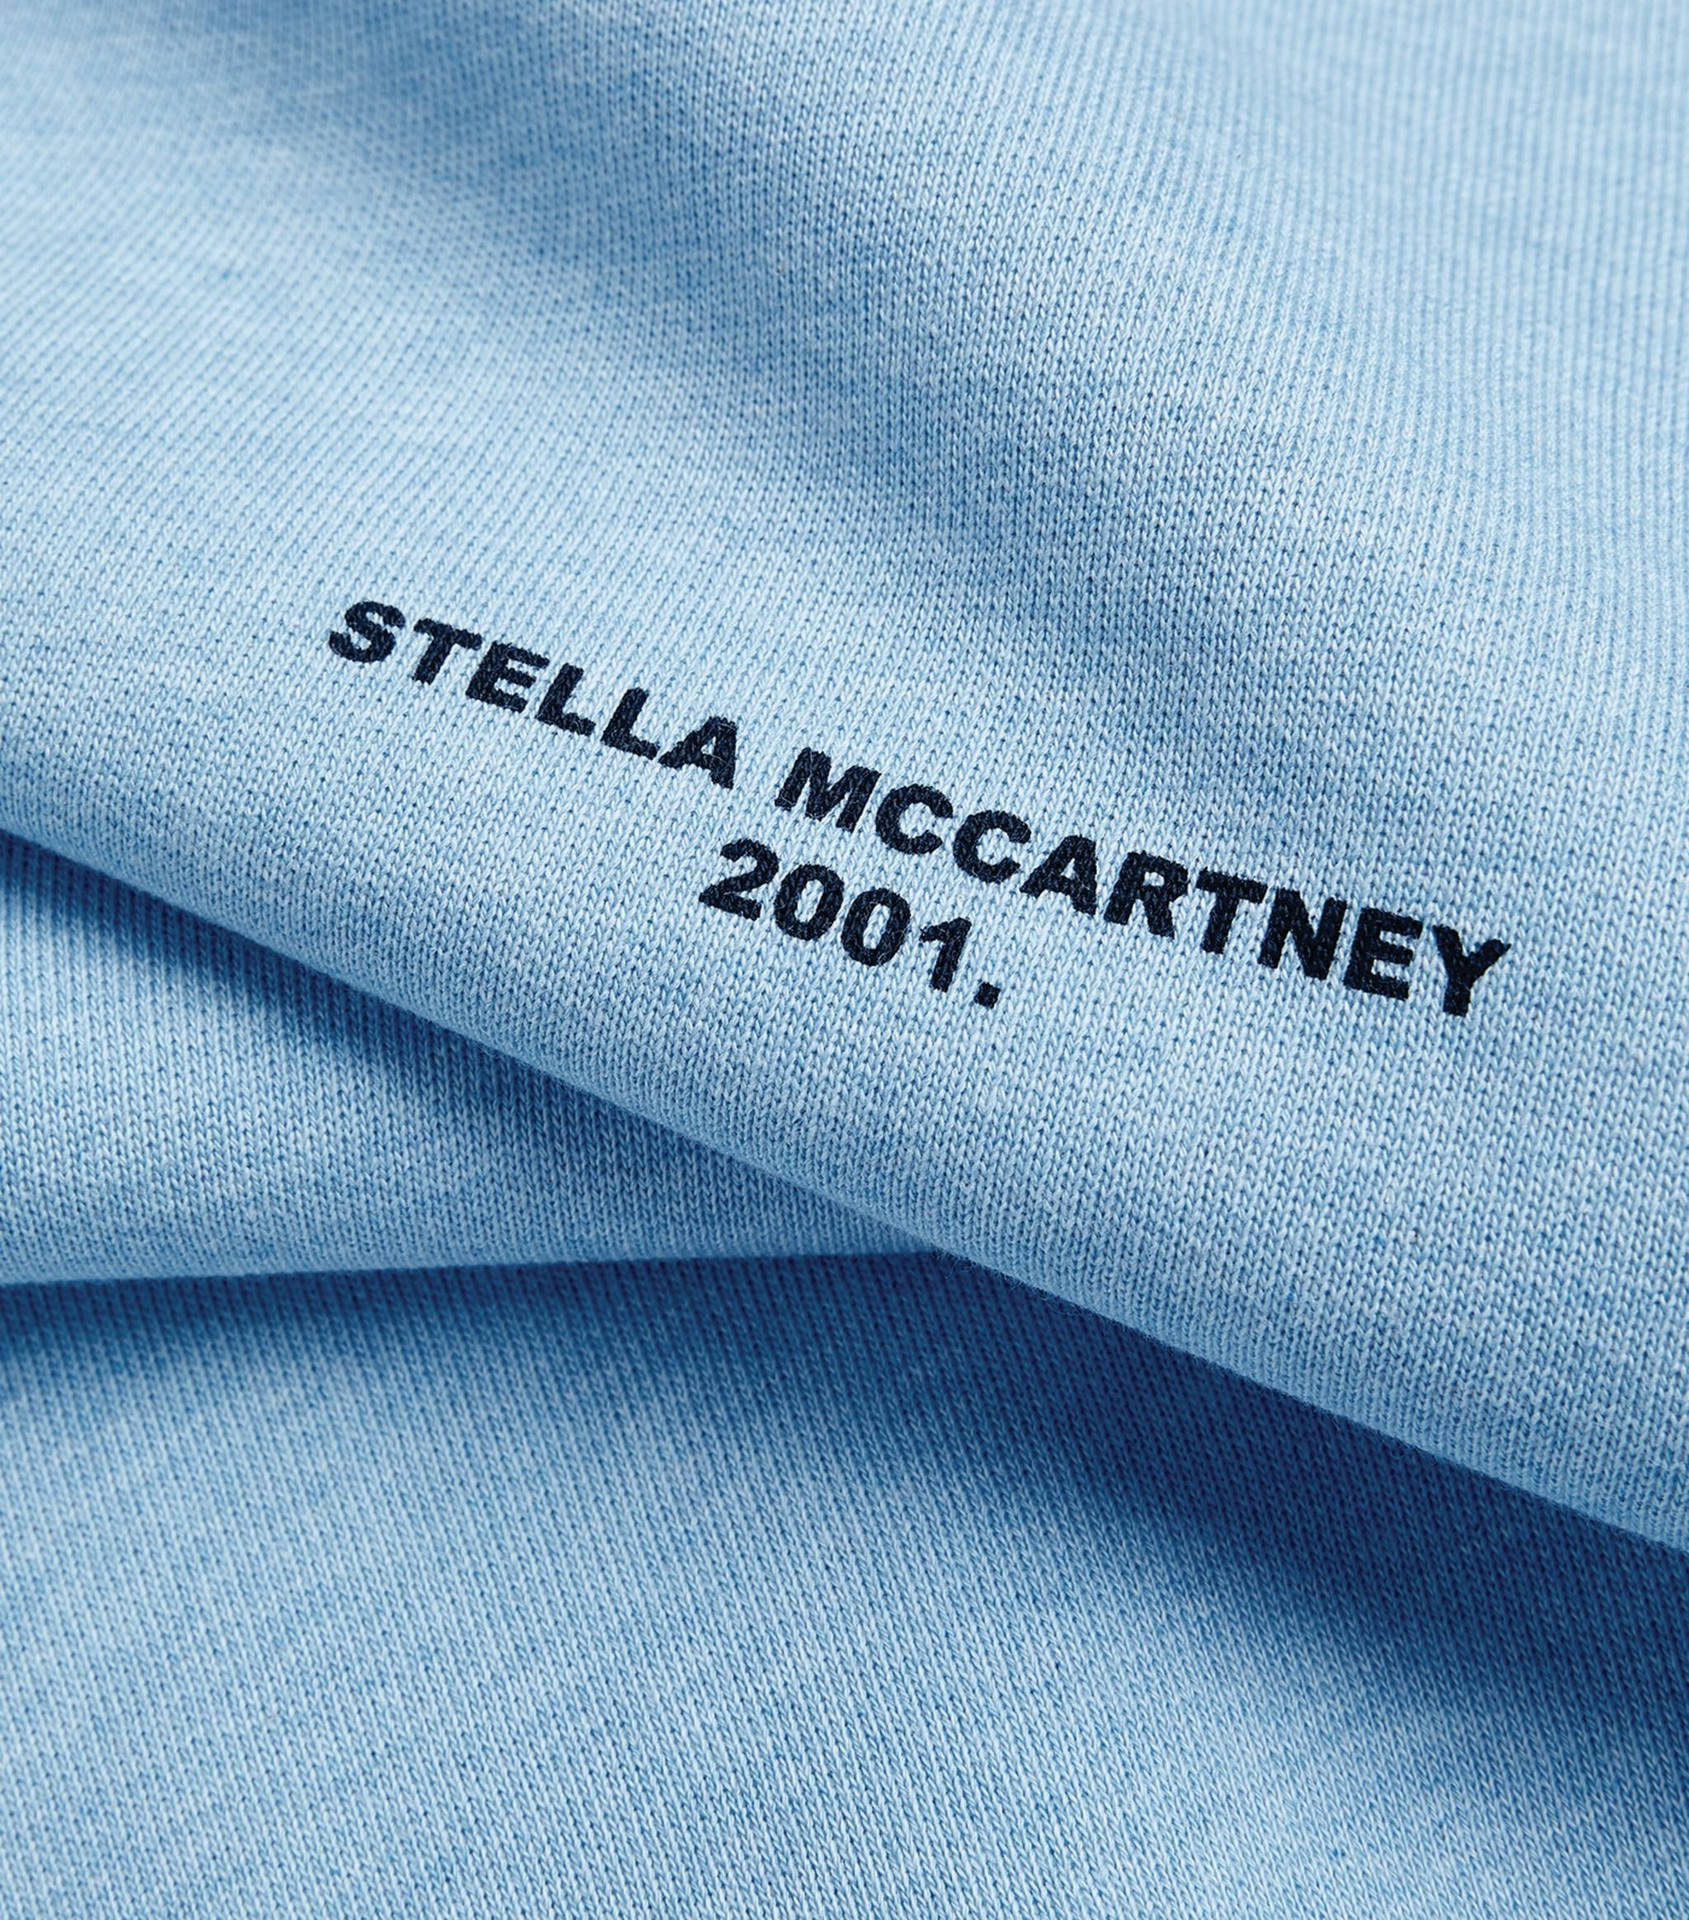 Designer Fabric With Stella McCartney Logo Wallpaper